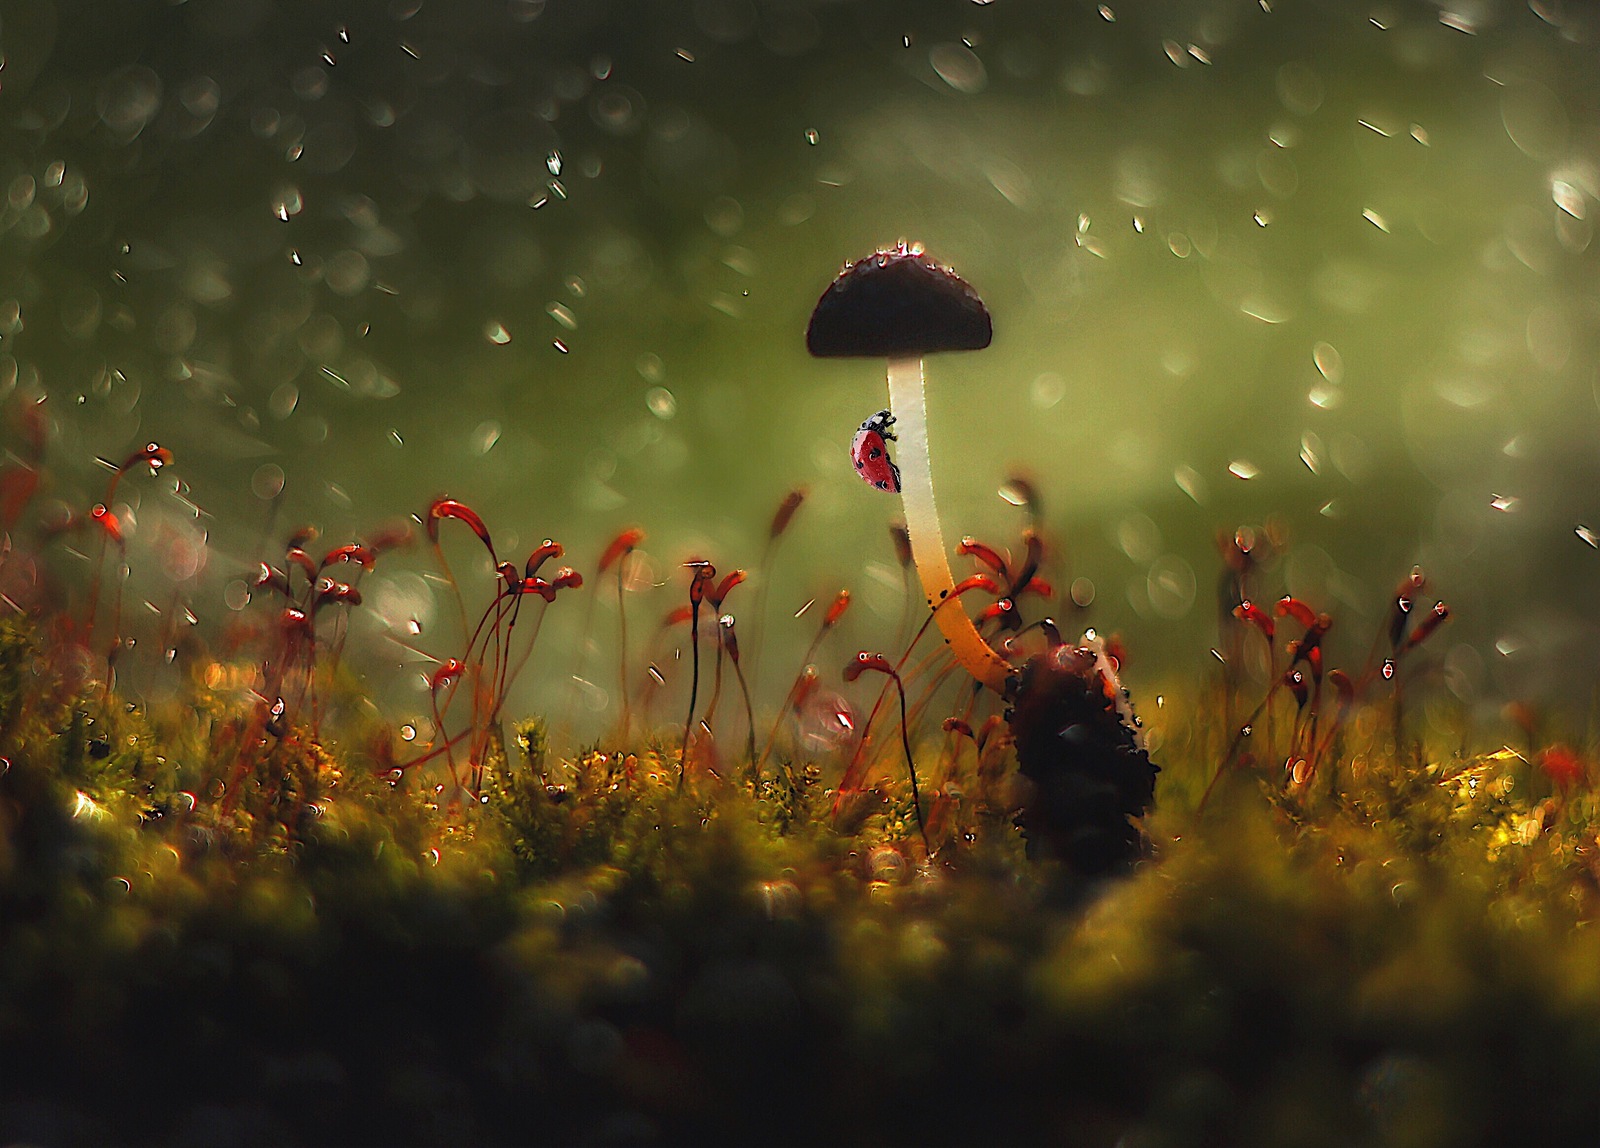 Umbrella. - The national geographic, The photo, ladybug, Mushrooms, Rain